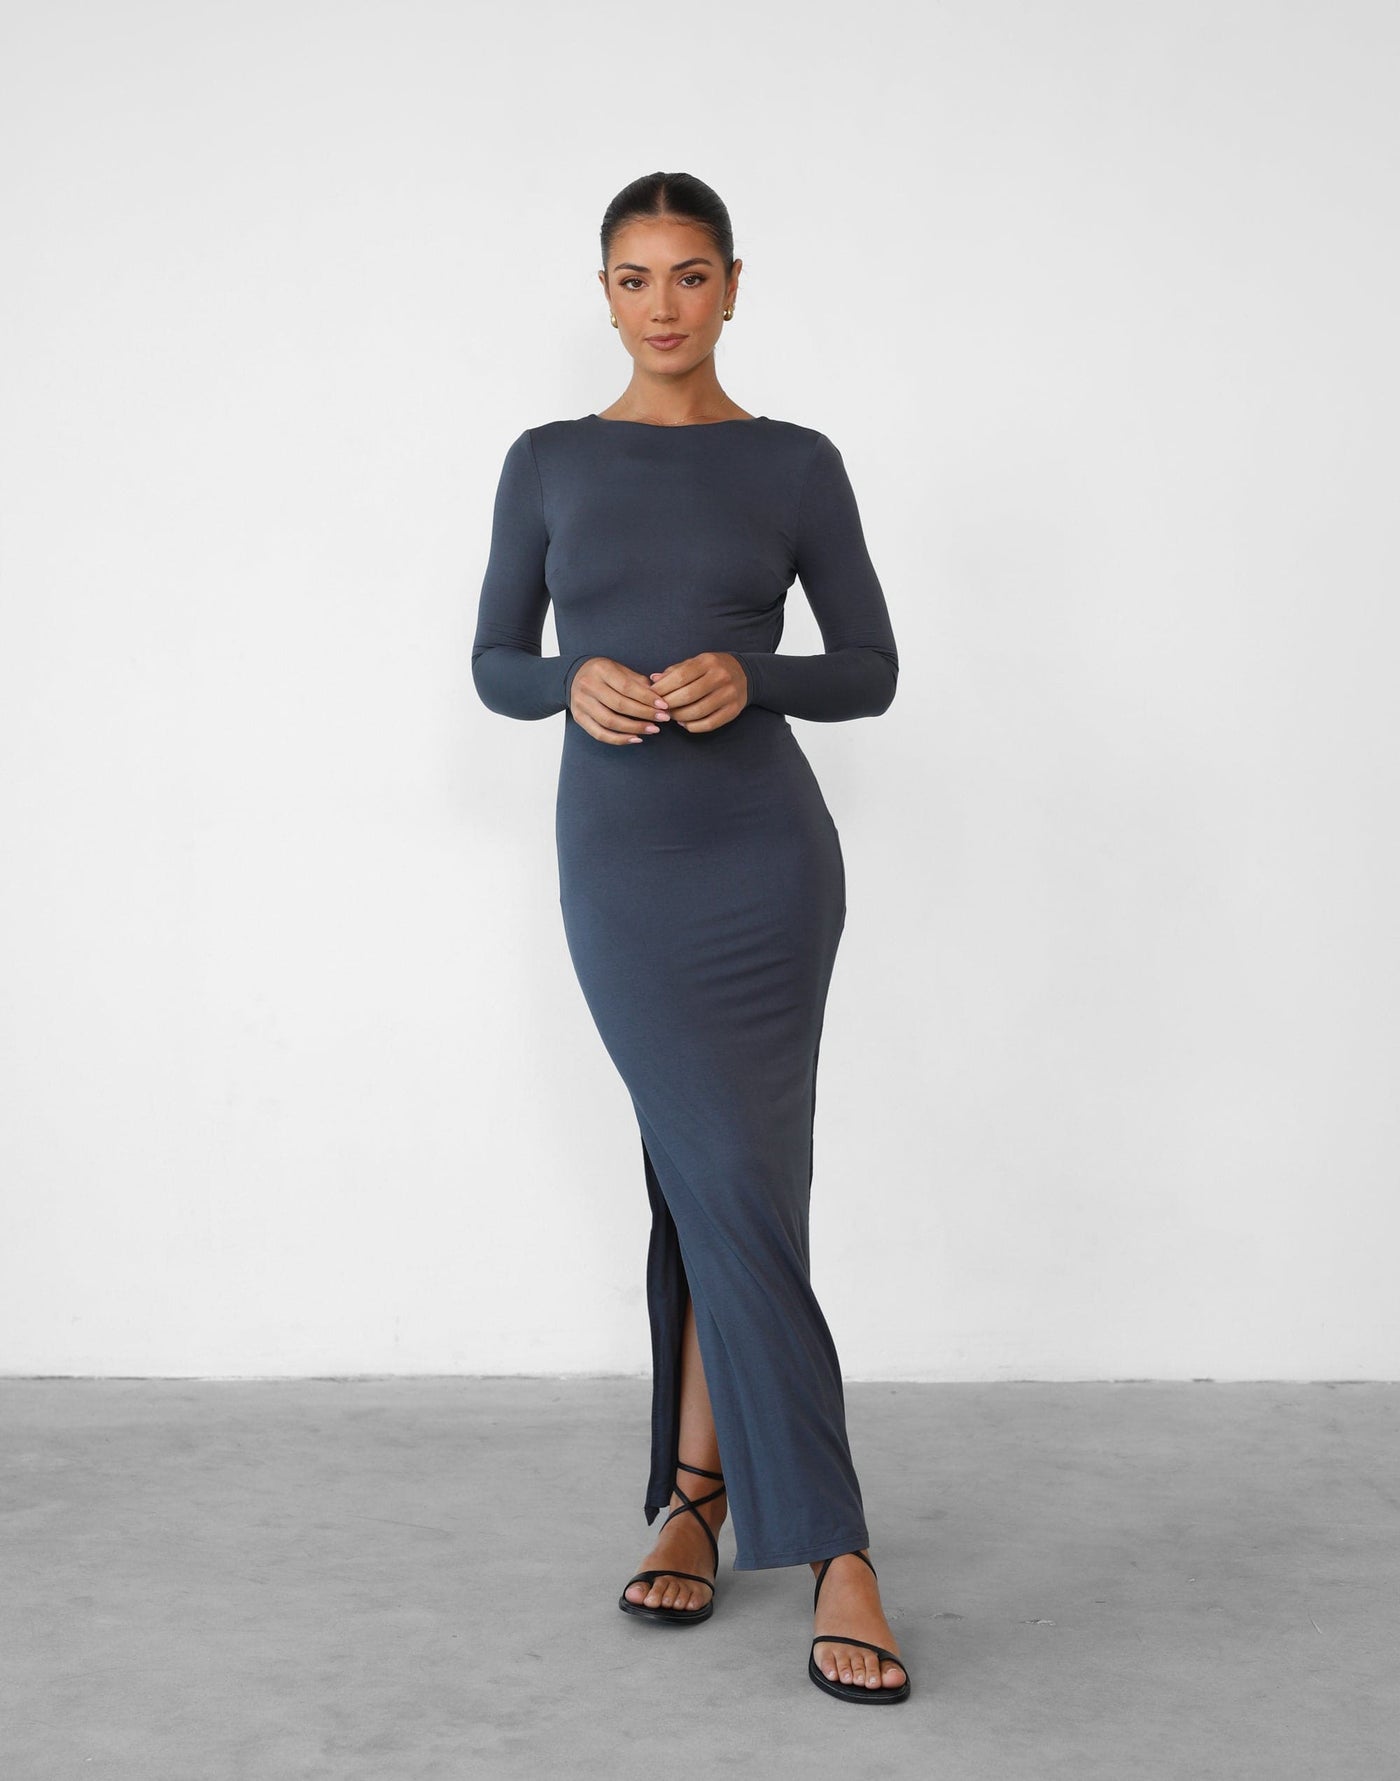 Luna Long Sleeve Maxi Dress (Slate) - Jersey Low Back Maxi Dress - Women's Dress - Charcoal Clothing